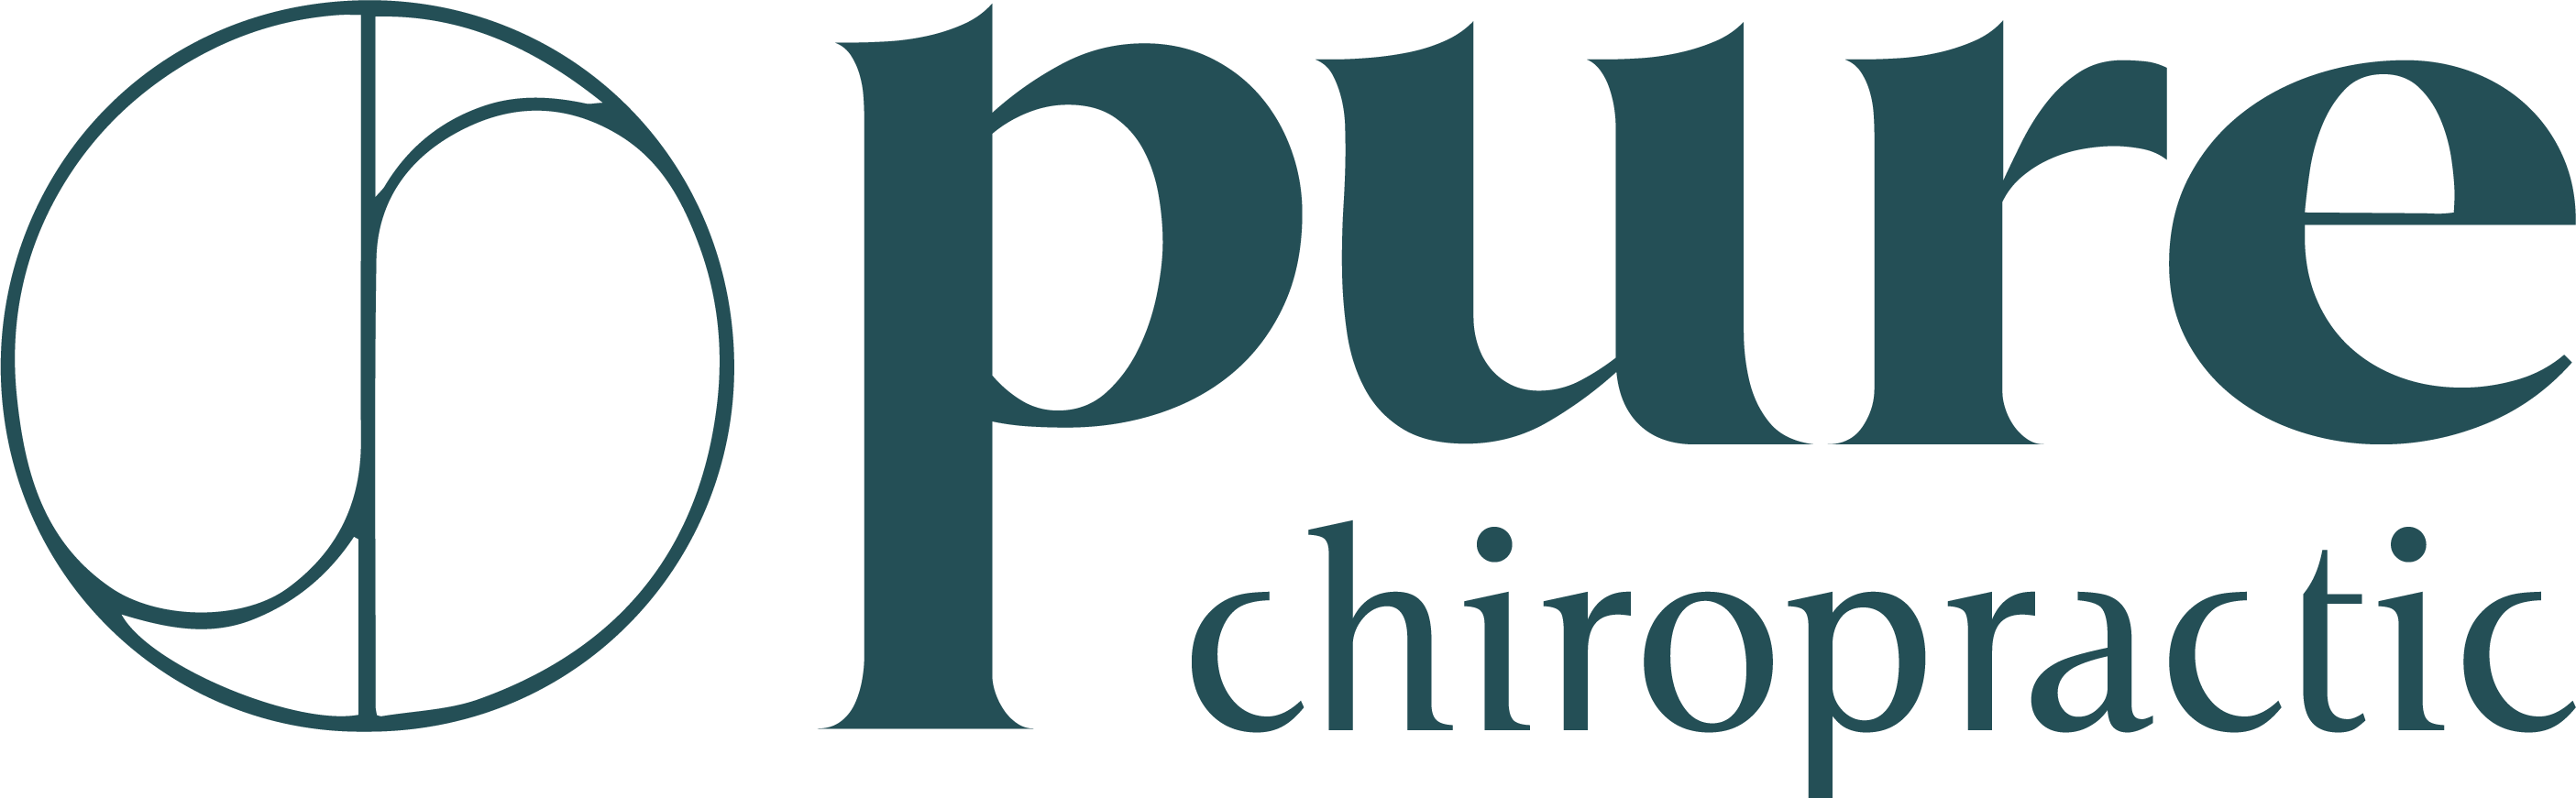 pure chiropractic logo blue